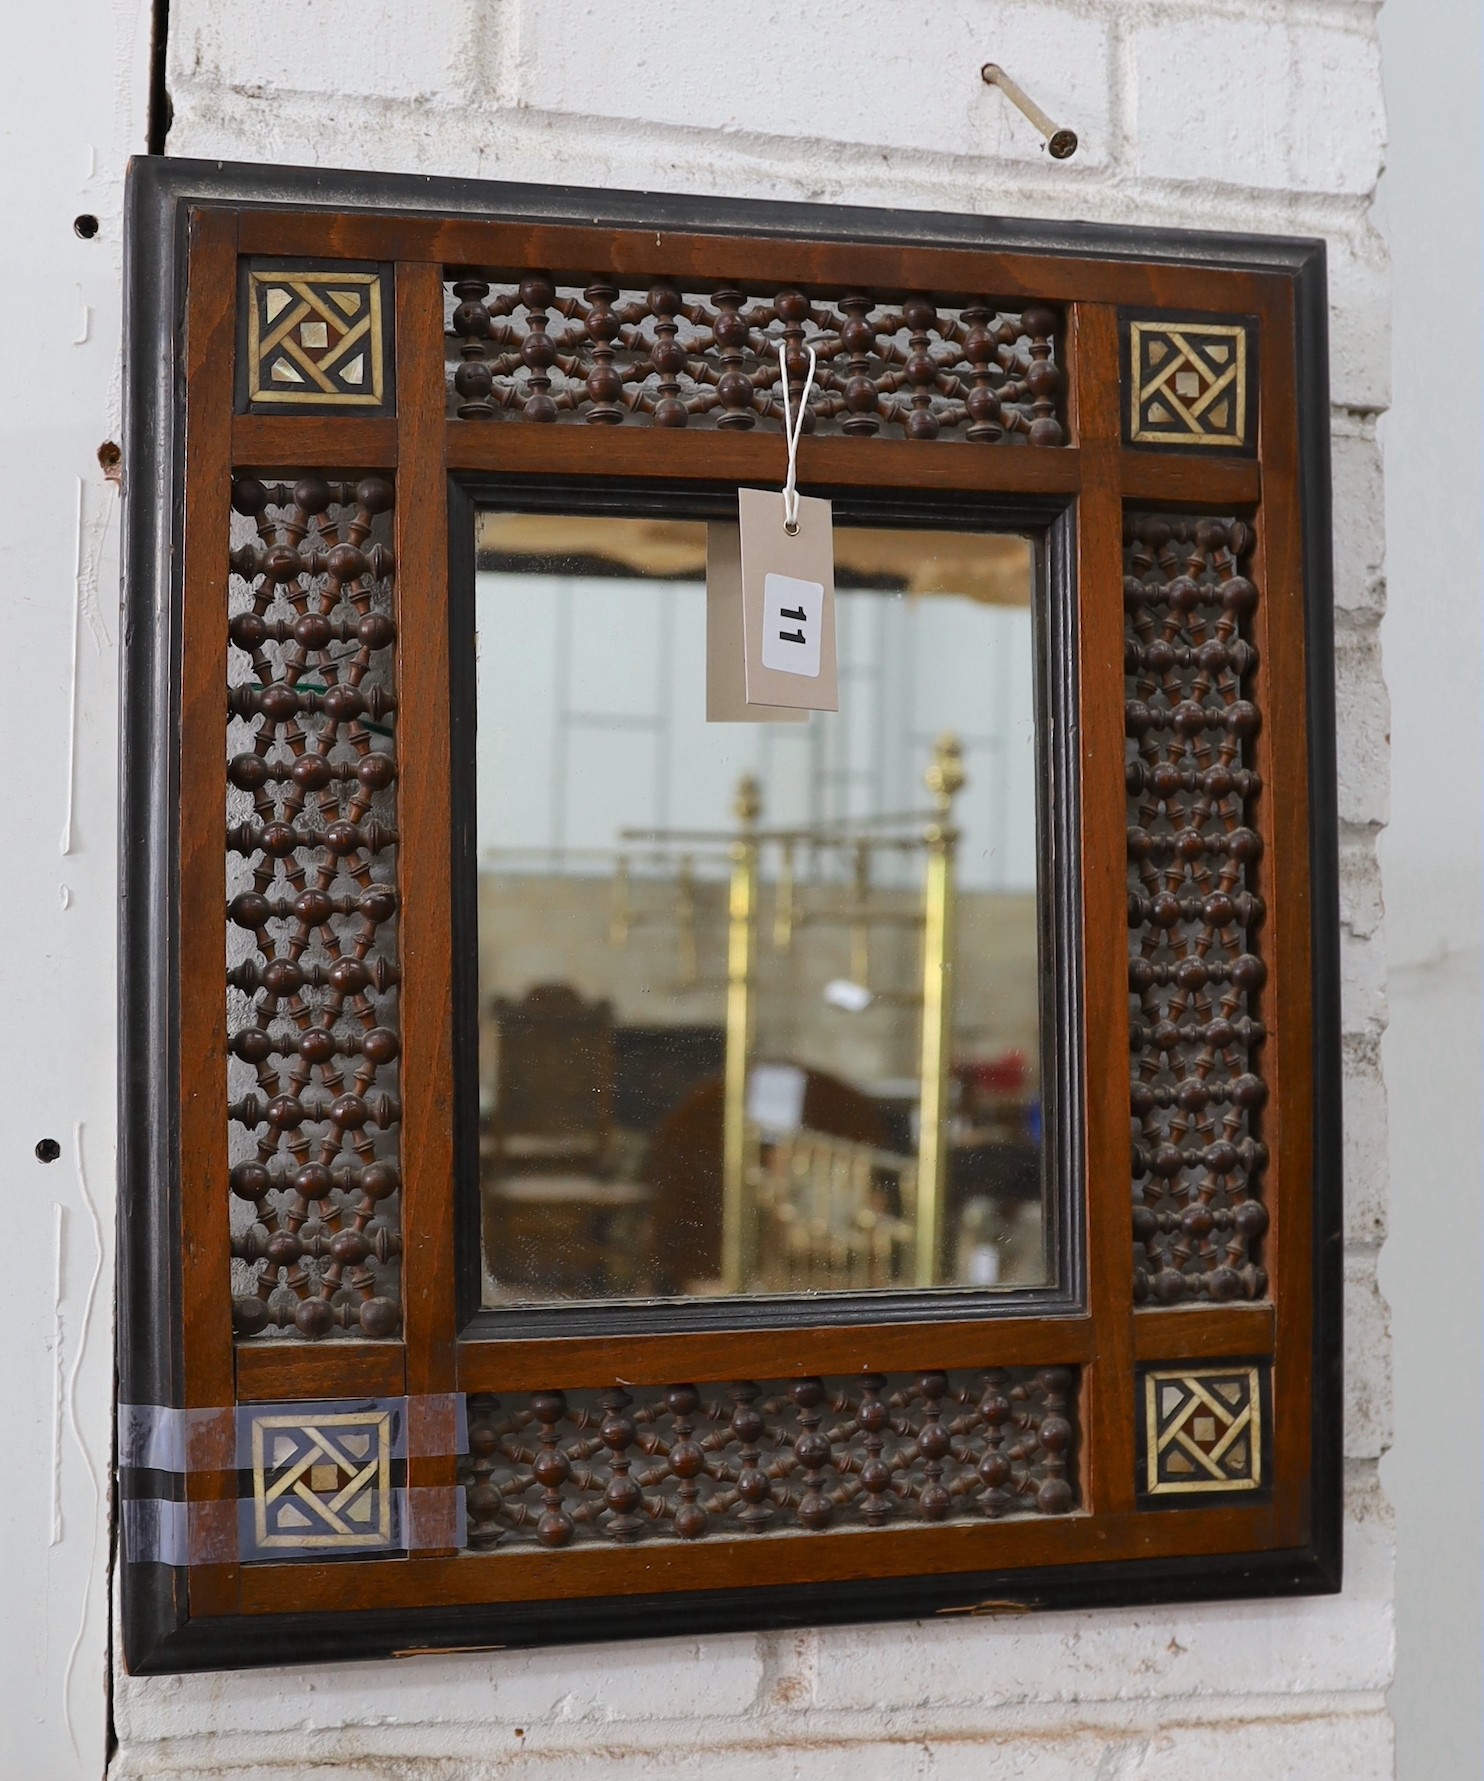 A Moorish mother of pearl inlaid wall mirror, width 41cm, height 47cm